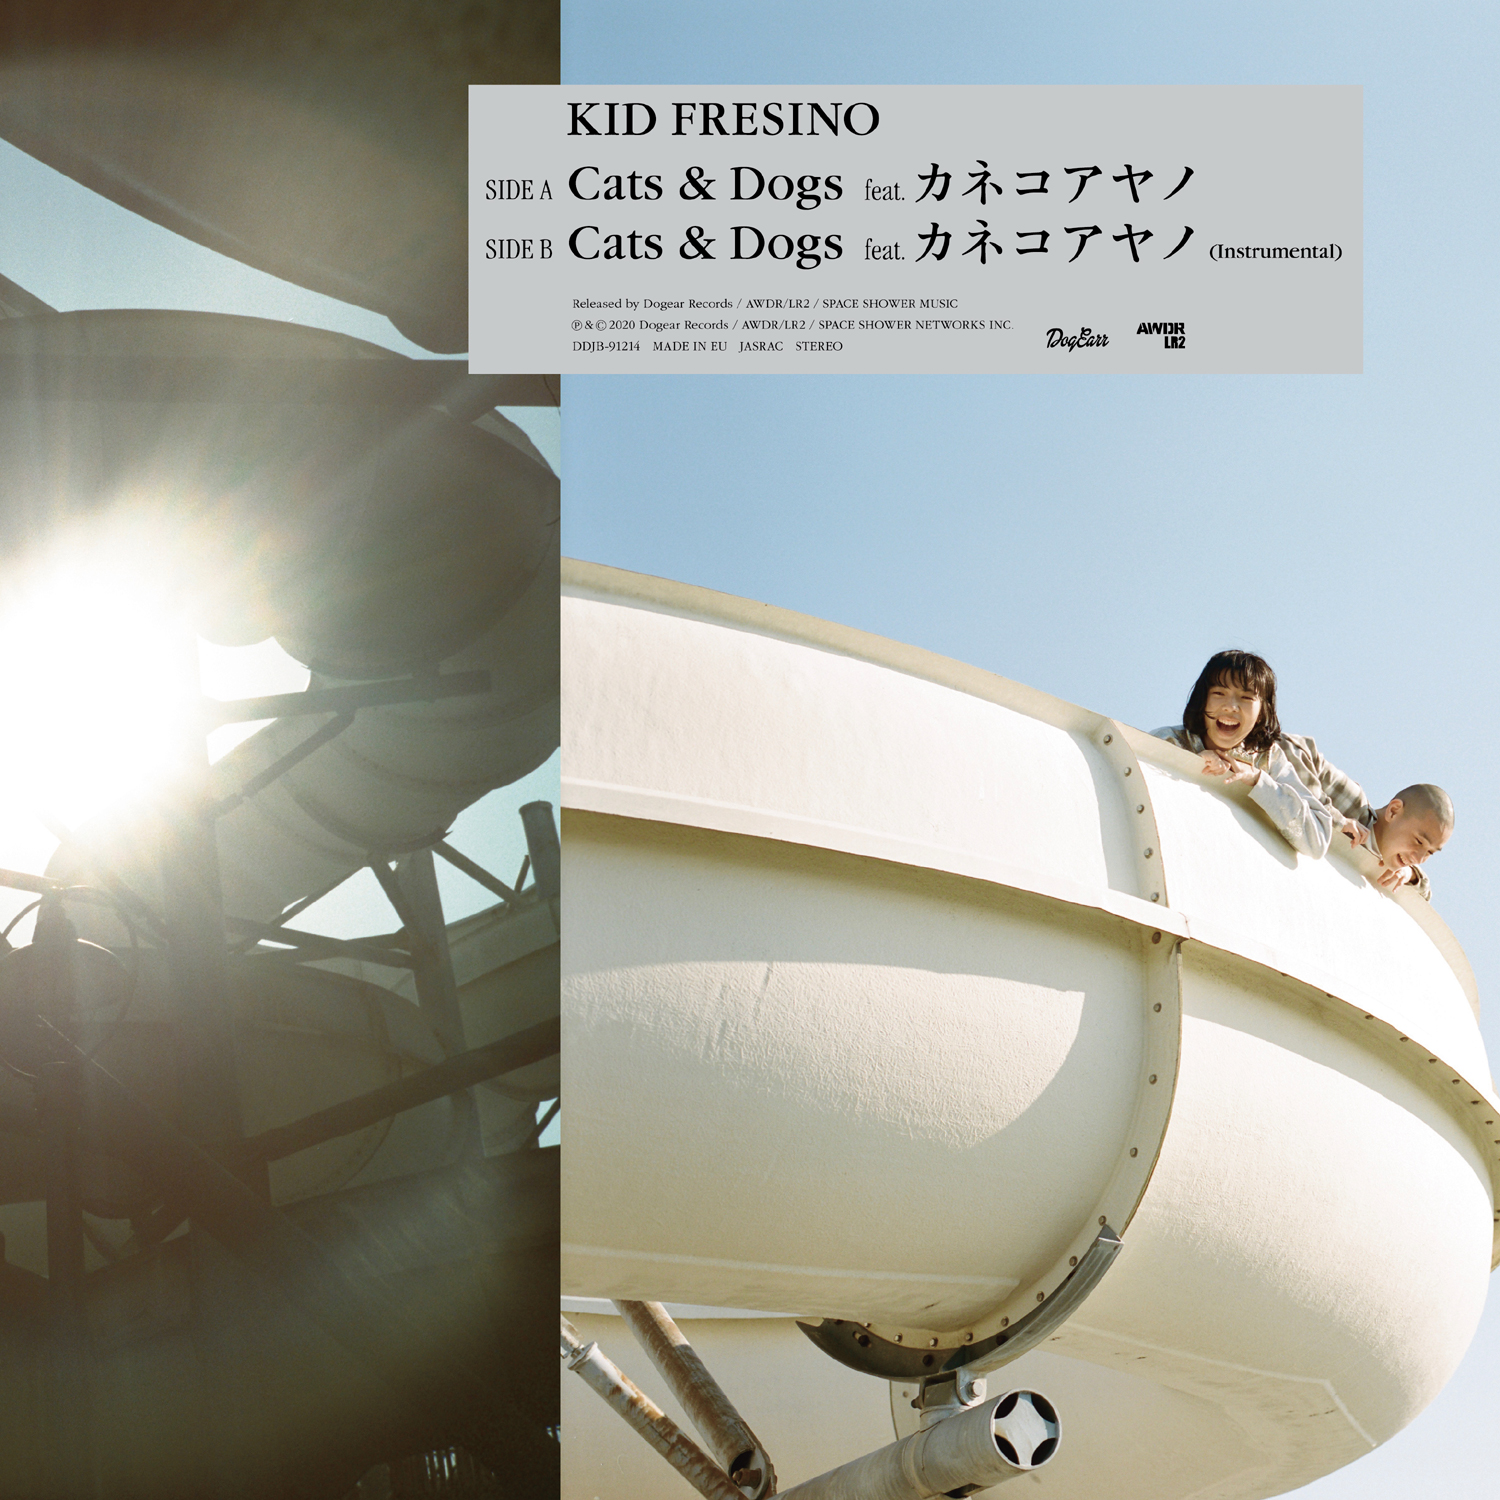 KID FRESINO 'Cats & Dogs feat. カネコアヤノ'